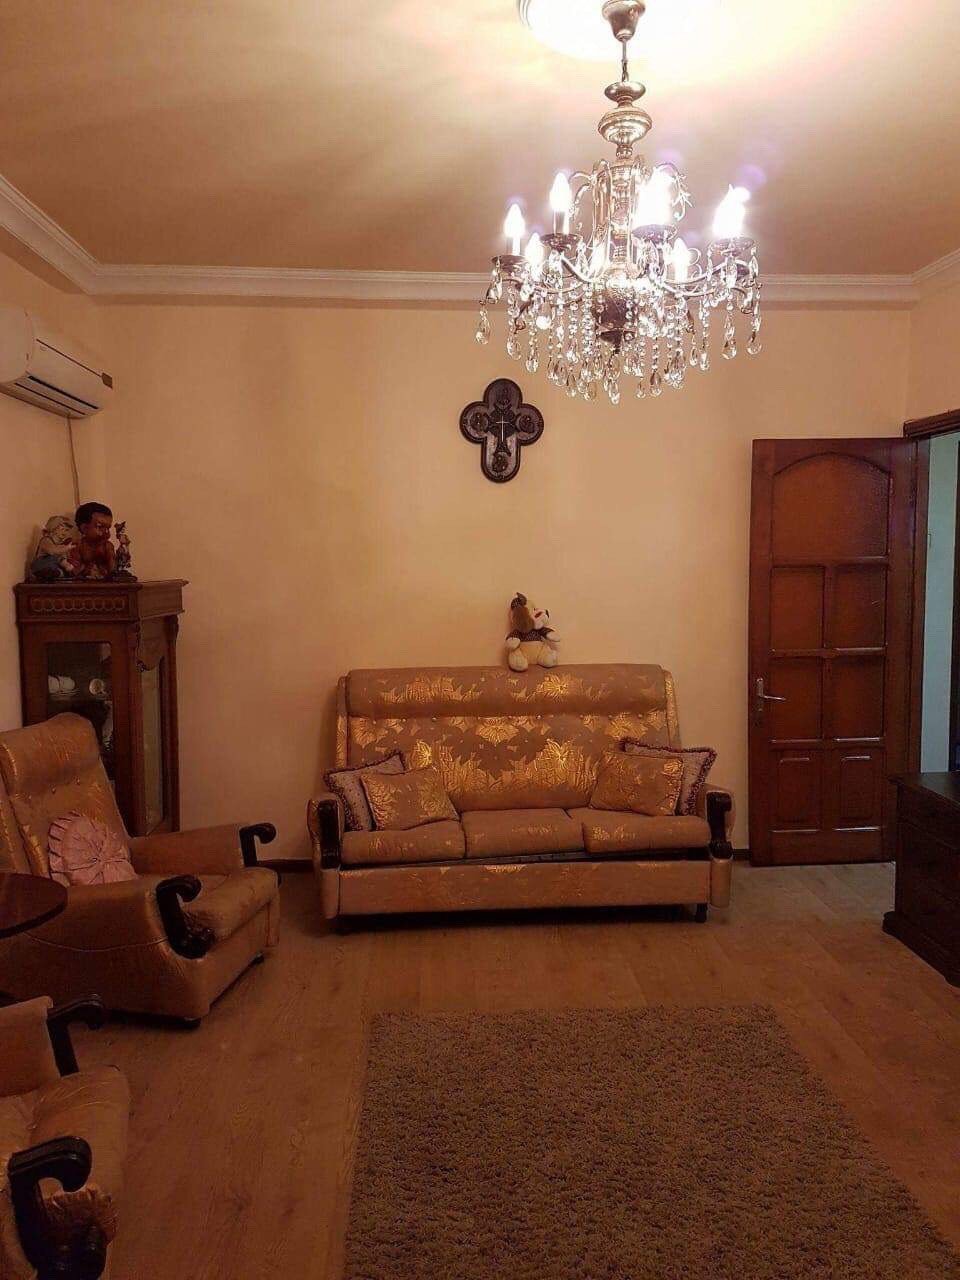 1-bedroom apartment in centre id-952 - Batumi Vacation Rentals